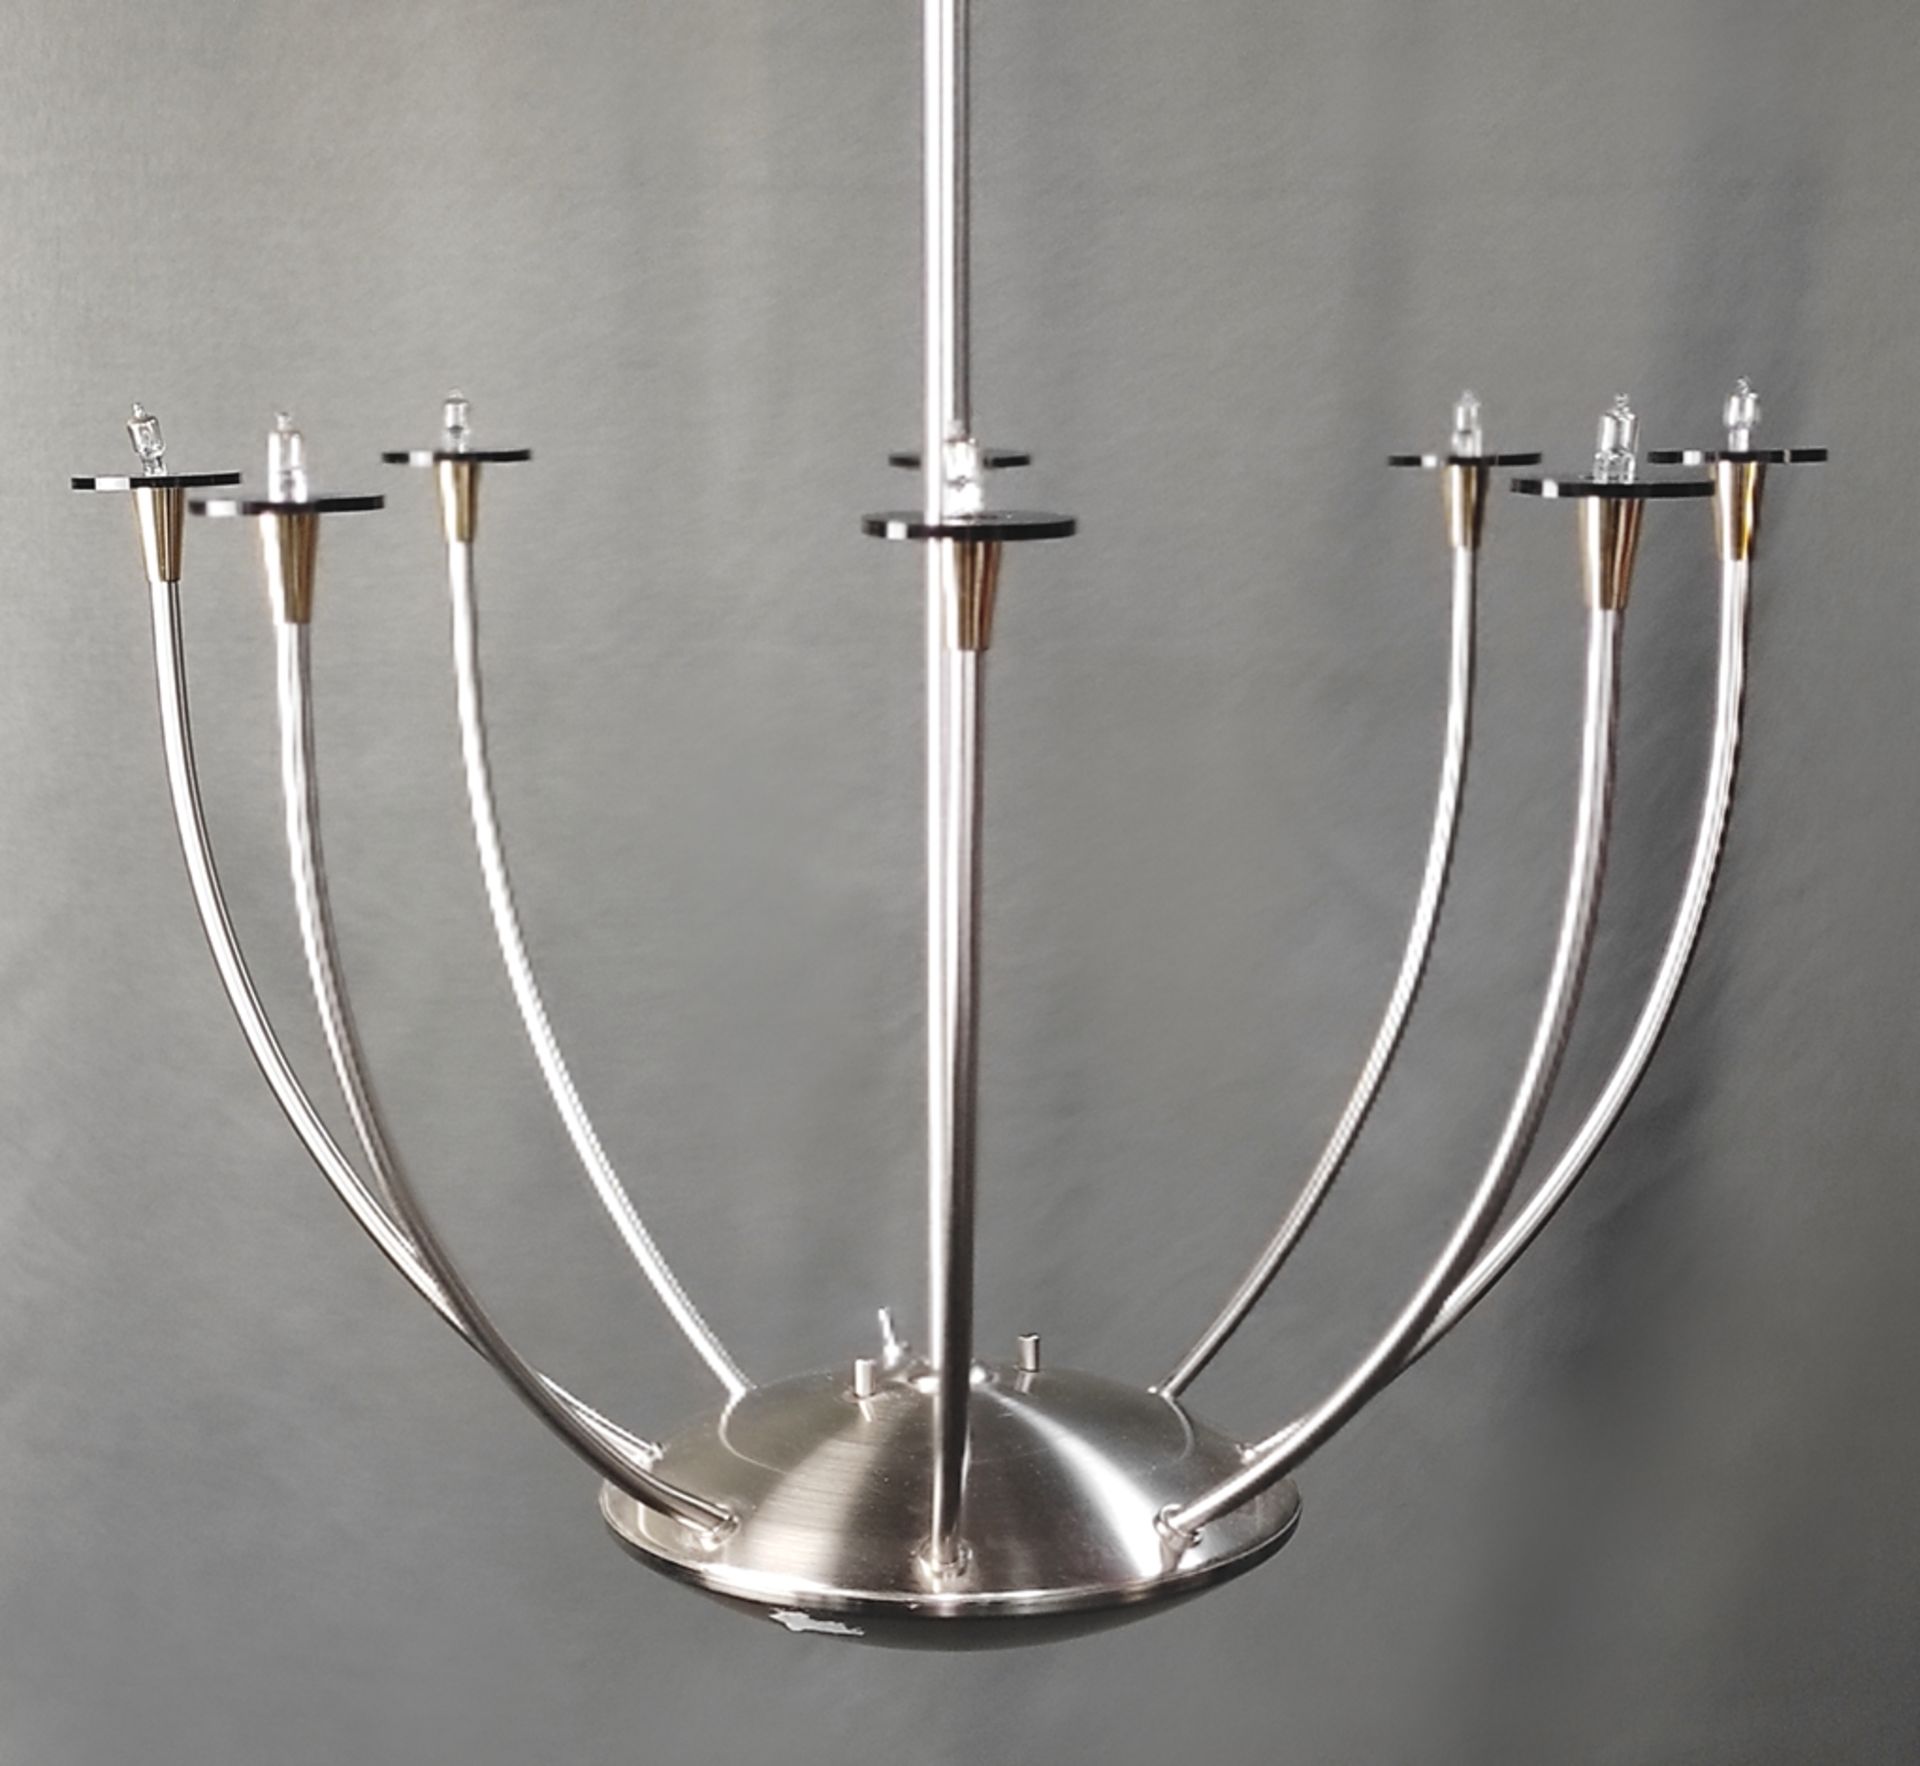 Design ceiling lamp, Baulmann Leuchten, probably 1970s, chrome-plated metal frame, nine arms with e